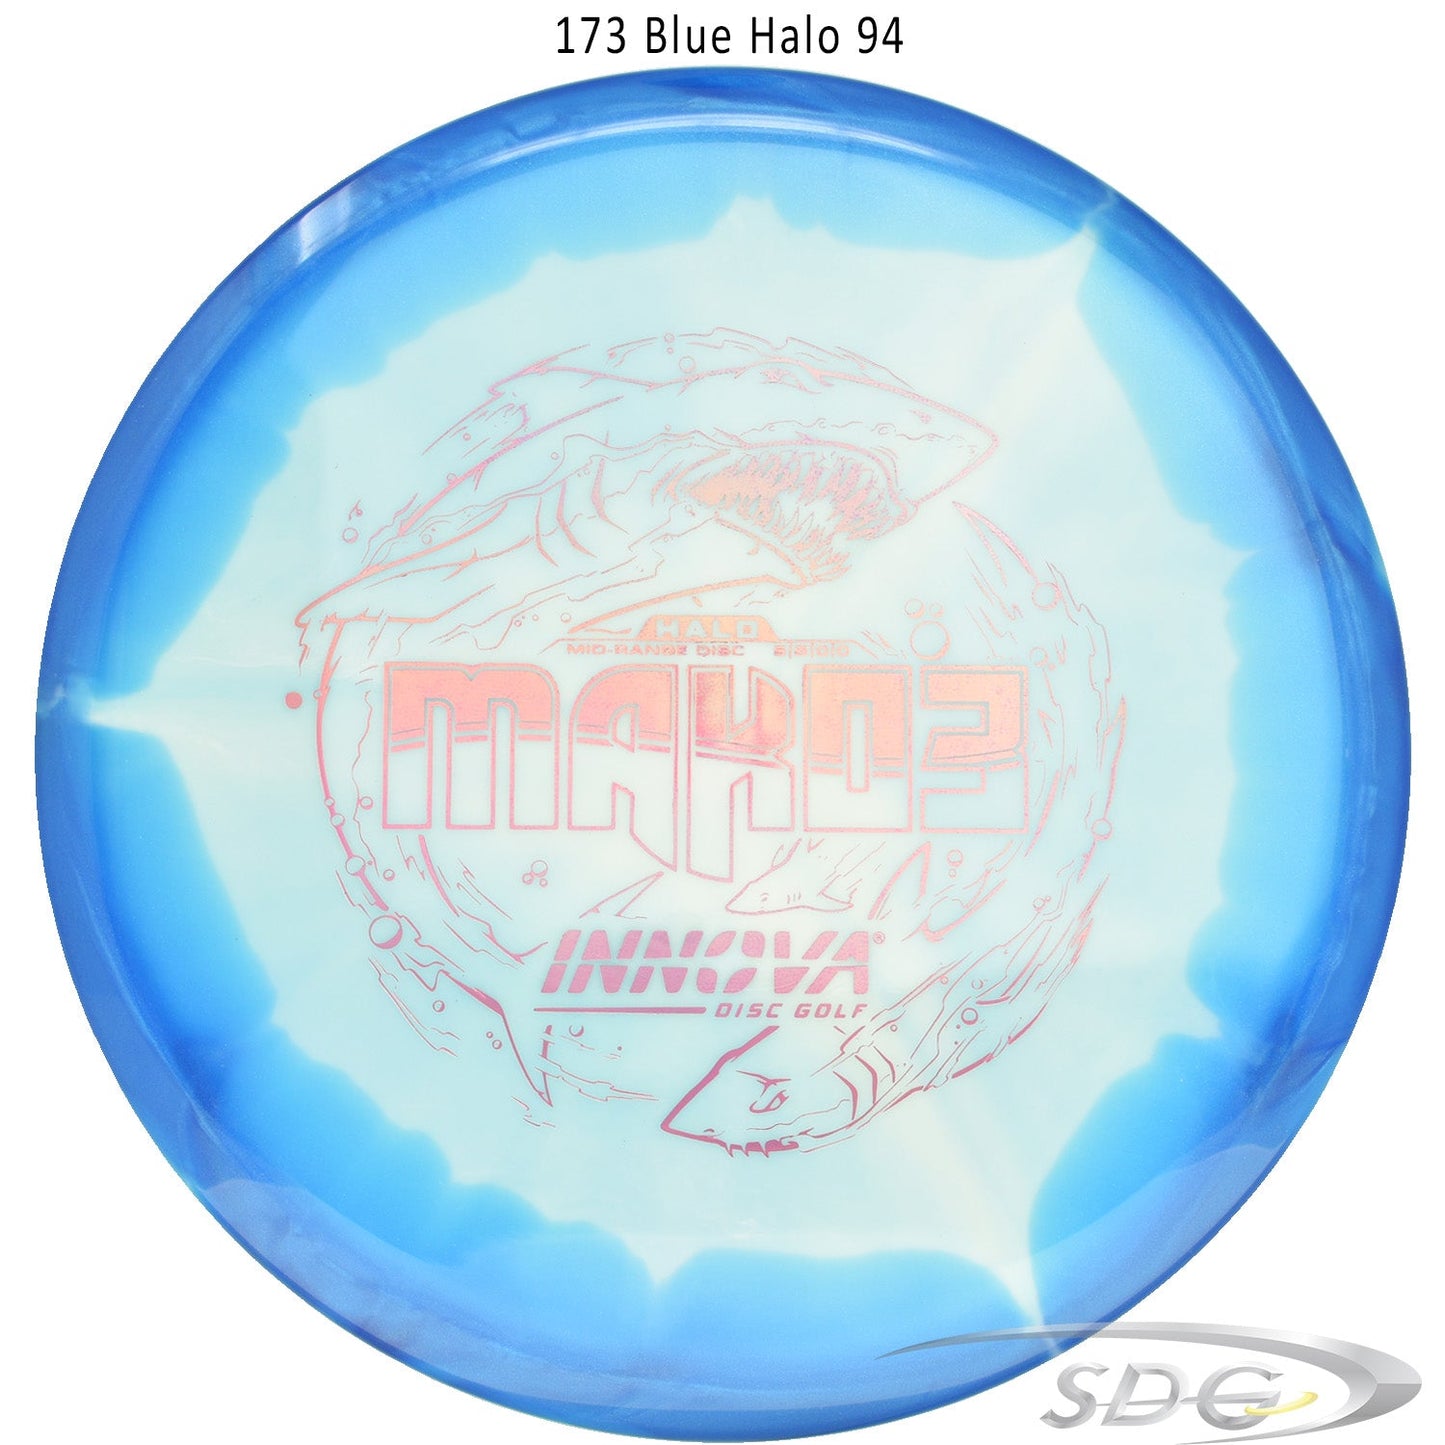 innova-halo-star-mako3-disc-golf-mid-range 173 Blue Halo 94 